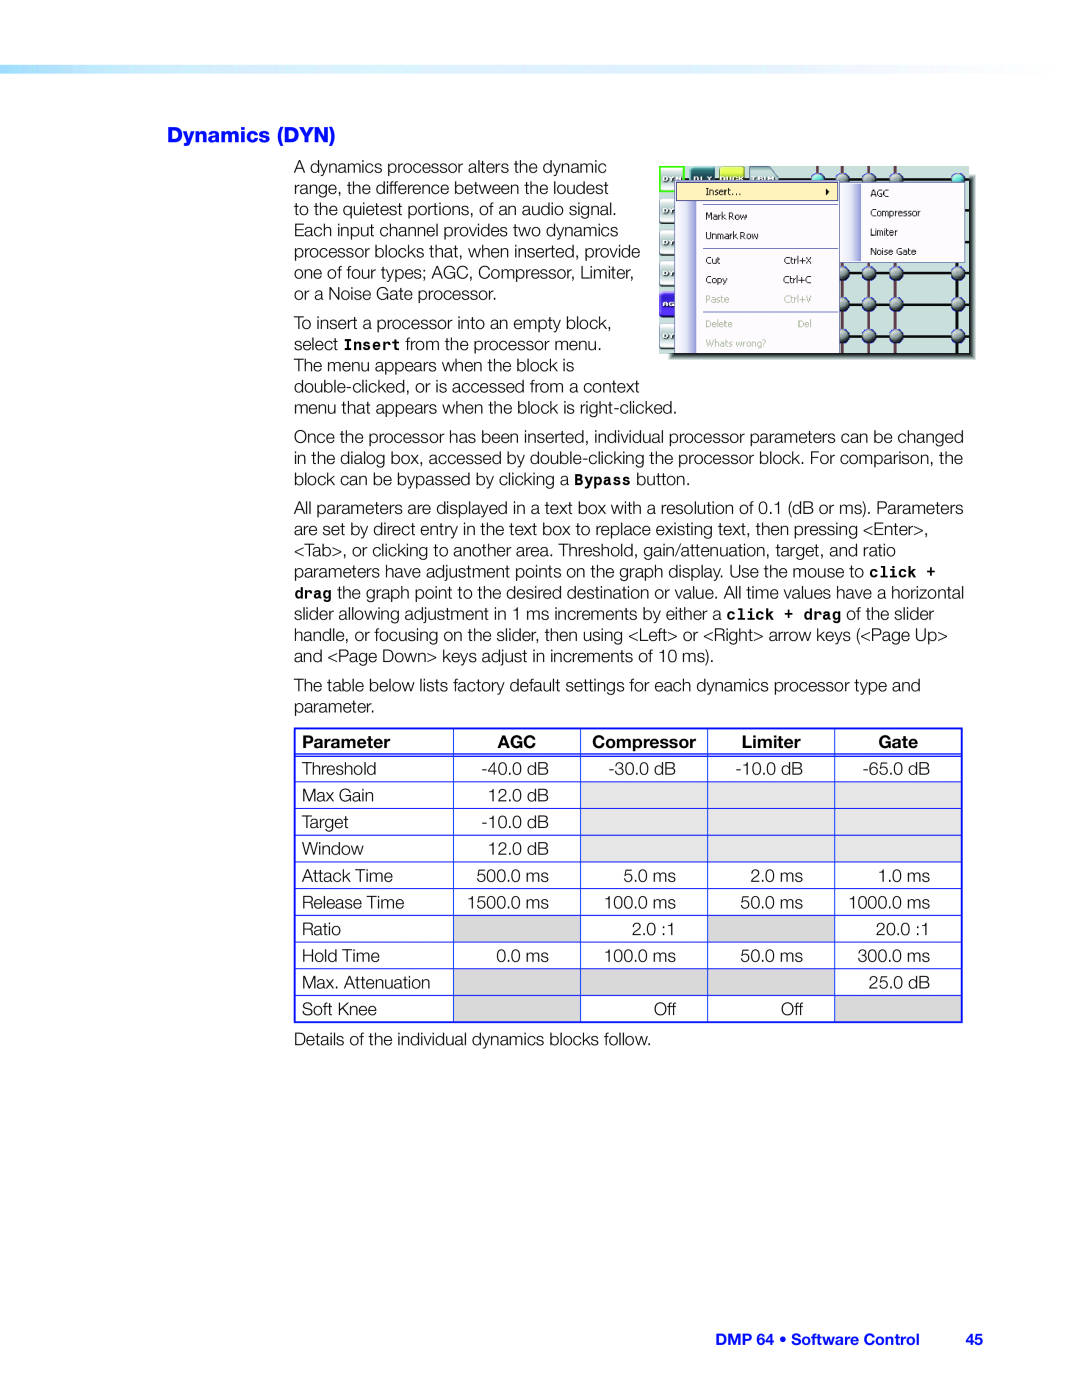 Extron electronic DMP 64 manual Dynamics DYN, Parameter, Compressor, Limiter, Gate 